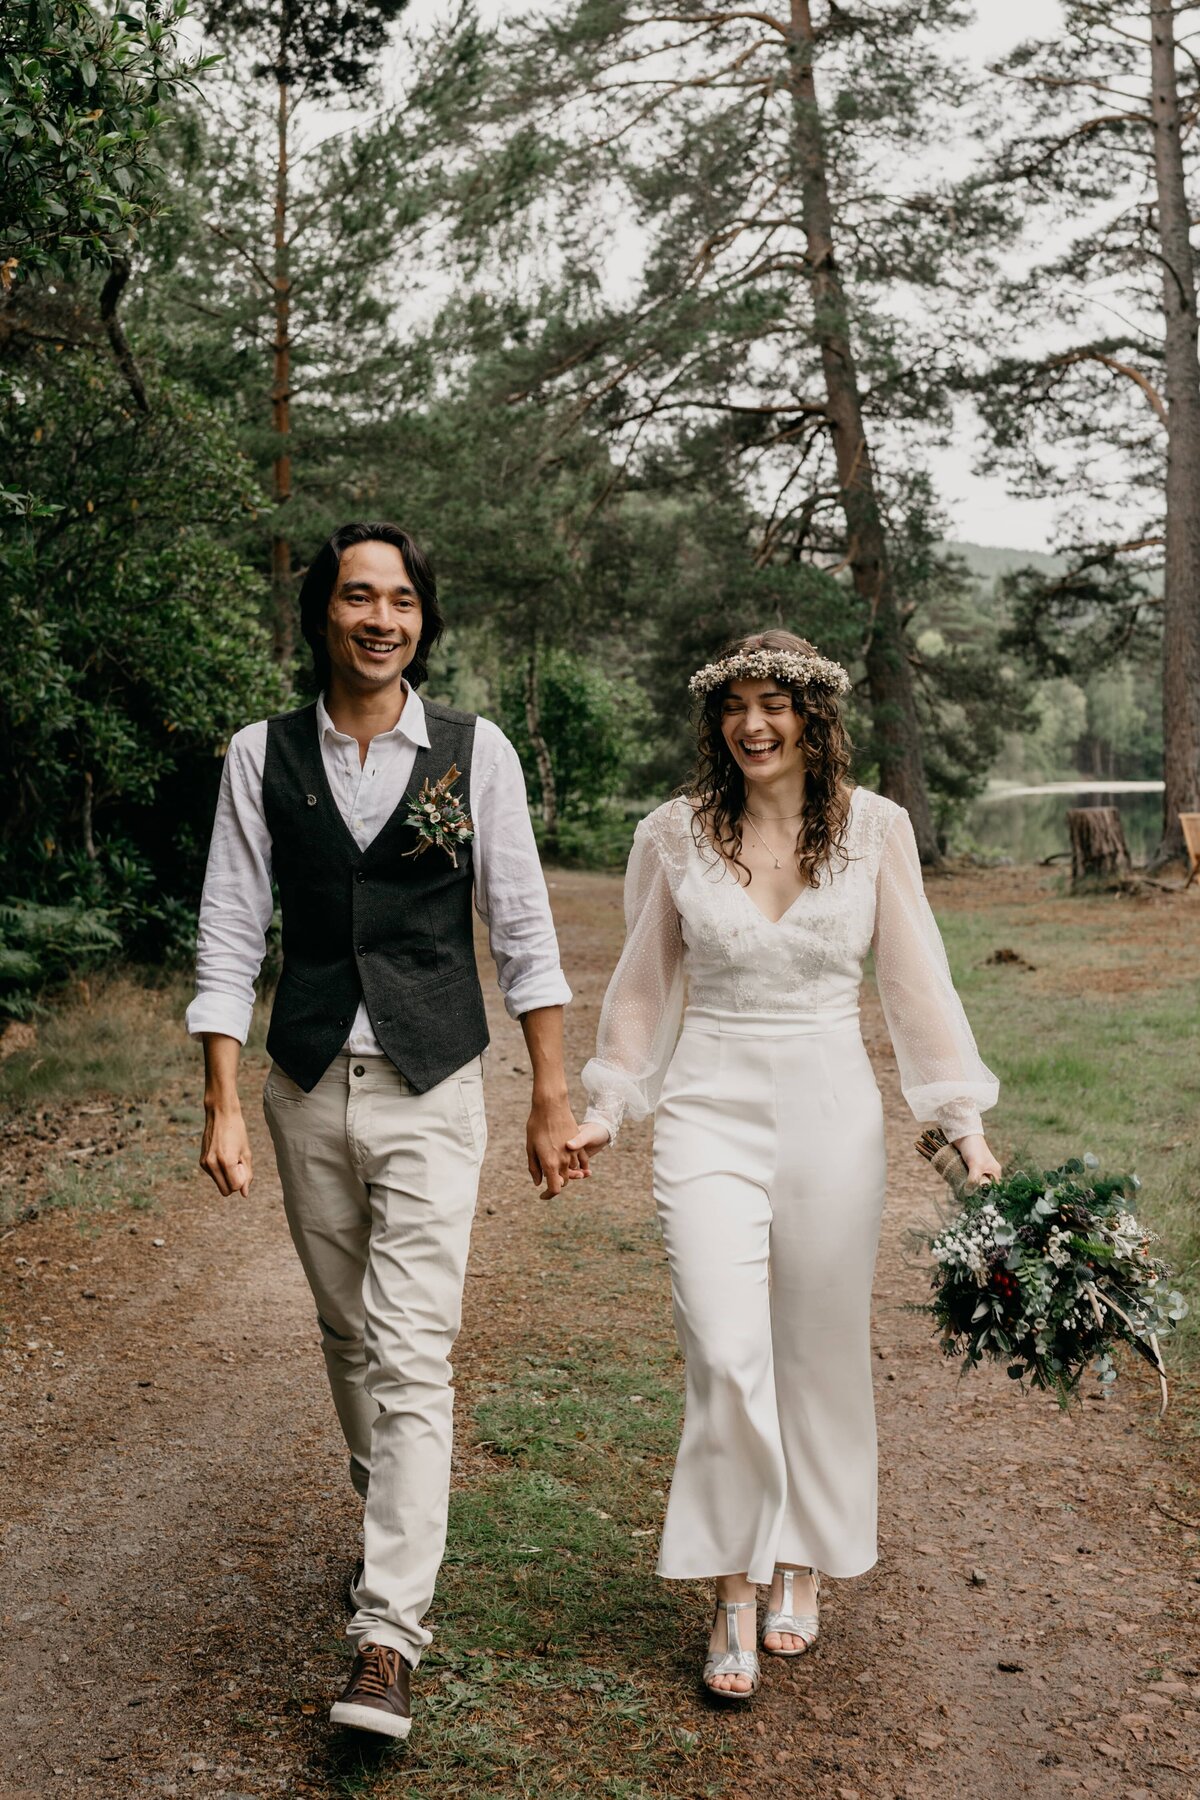 A newly married couple walk joyfully through the woodland grounds of Glen Tanar Ballroom after their wedding ceremony.